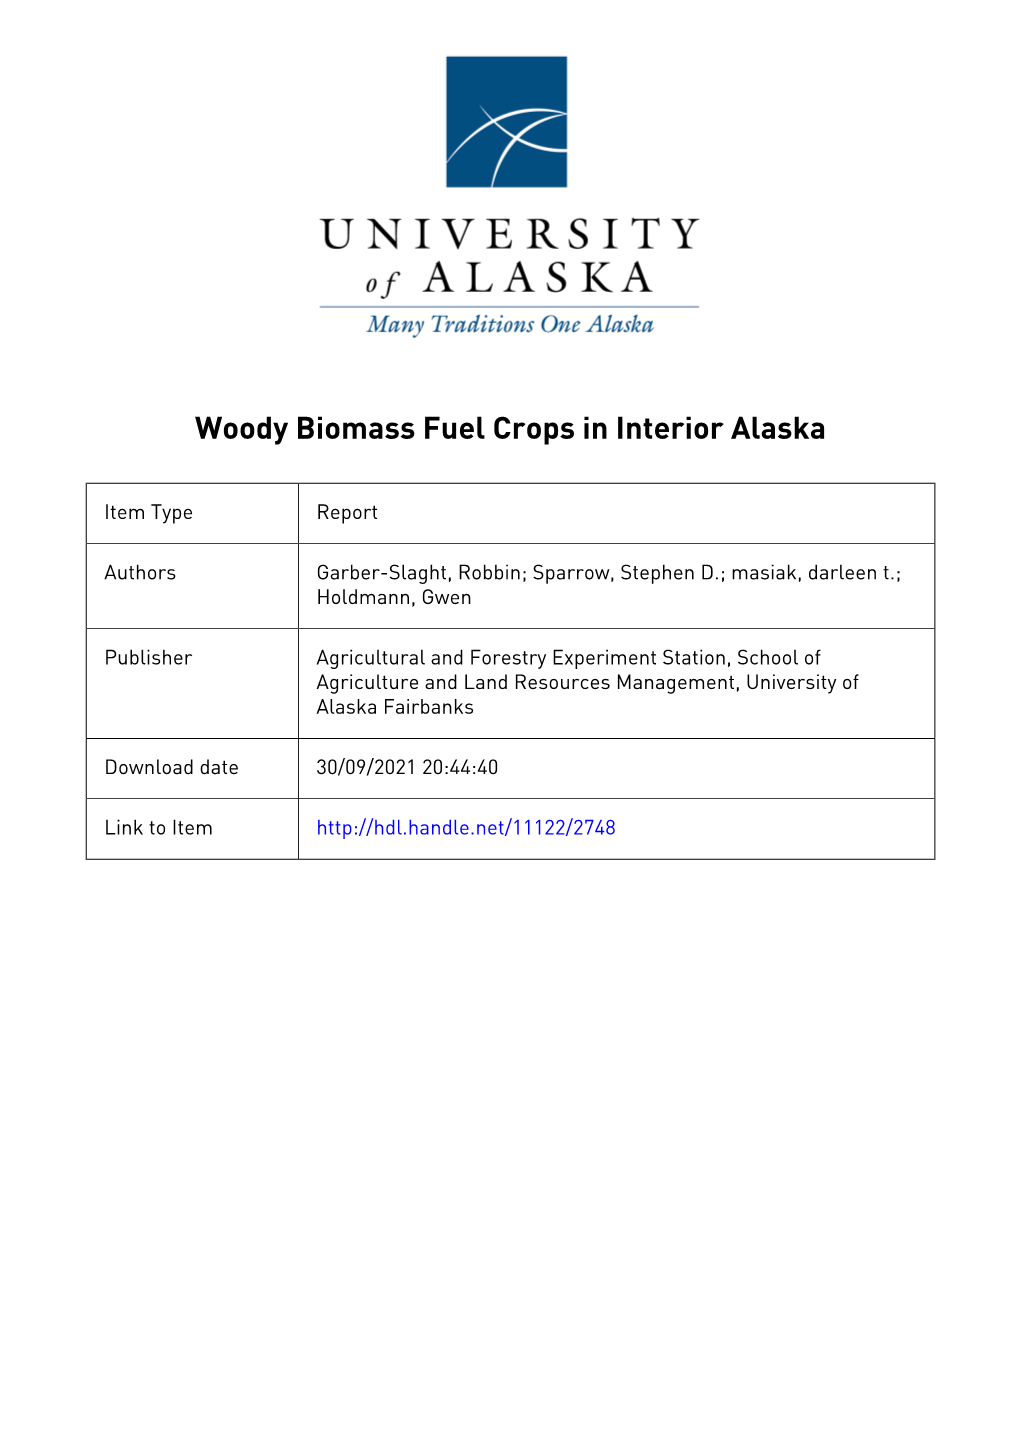 Opportunities for Woody Biomass Fuel Crops in Interior Alaska